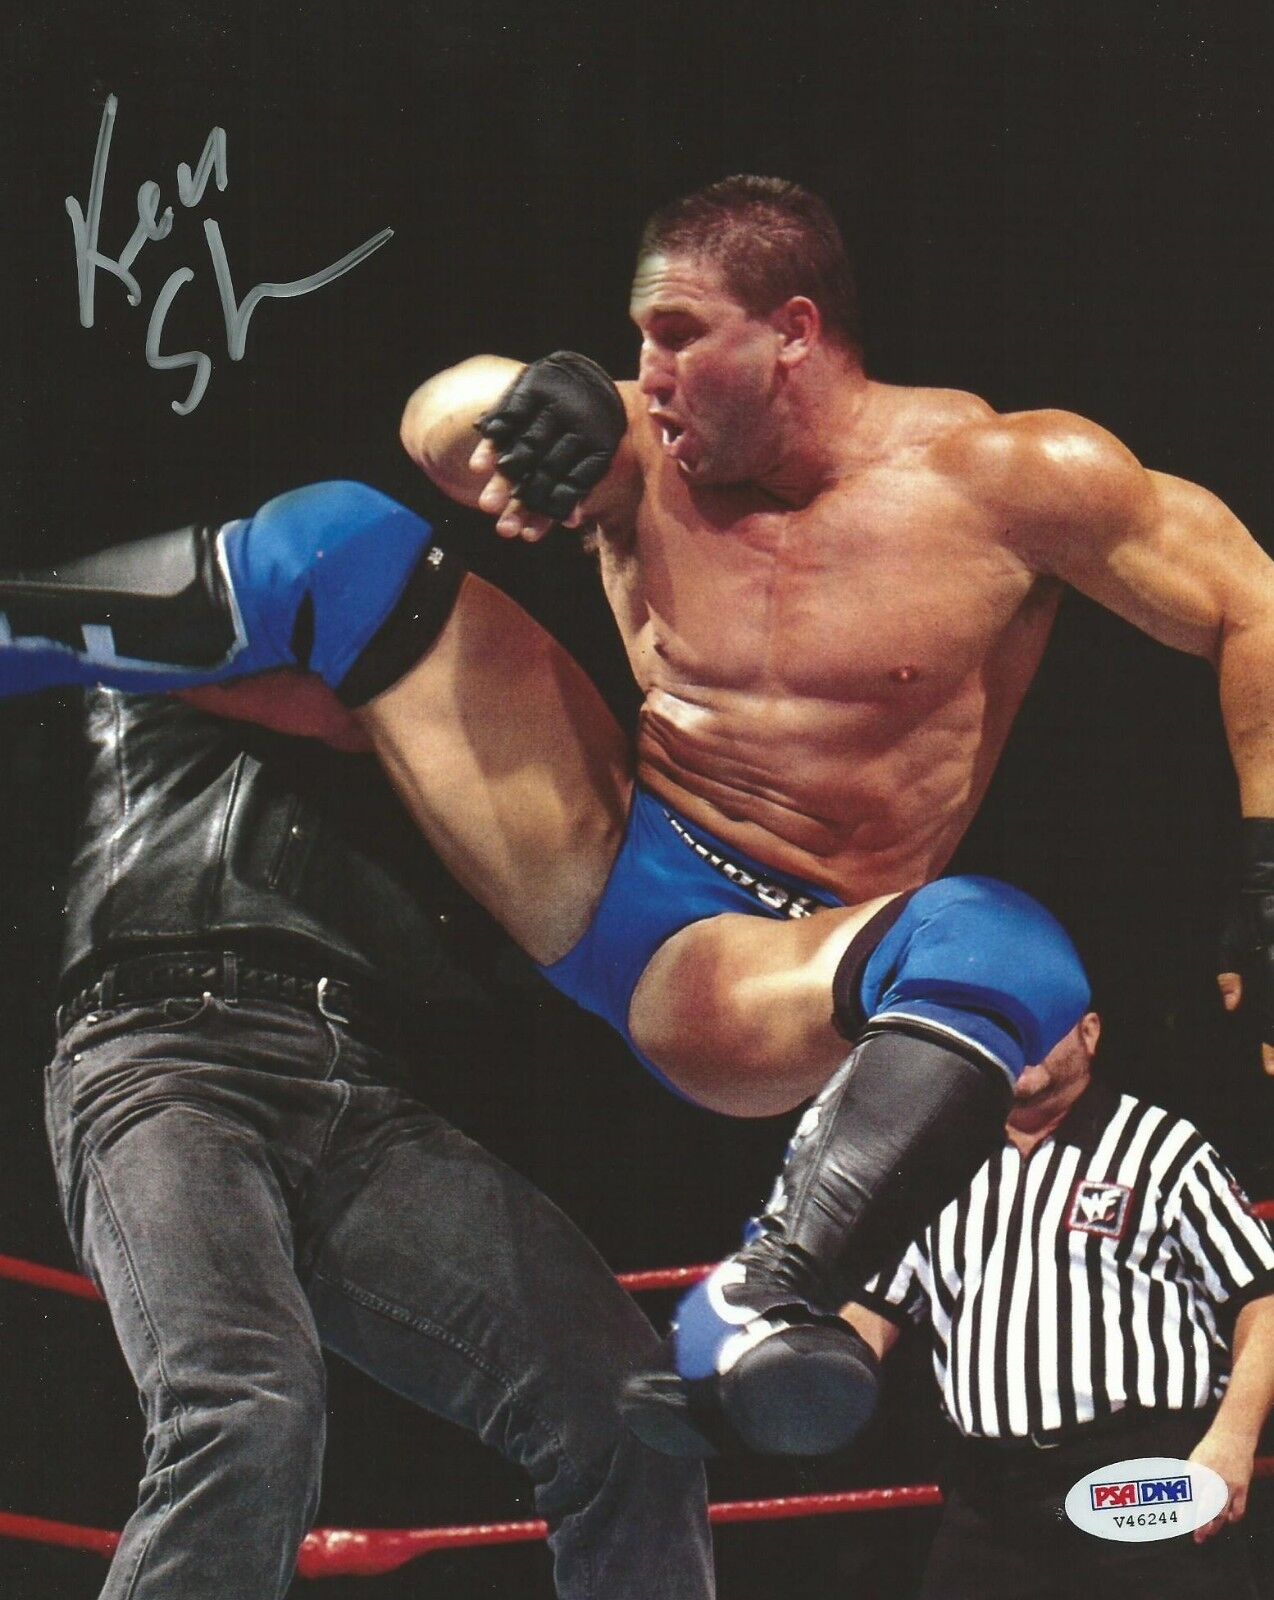 Ken Shamrock Signed WWE 8x10 Photo Poster painting PSA/DNA COA The World's Most Dangerous Man